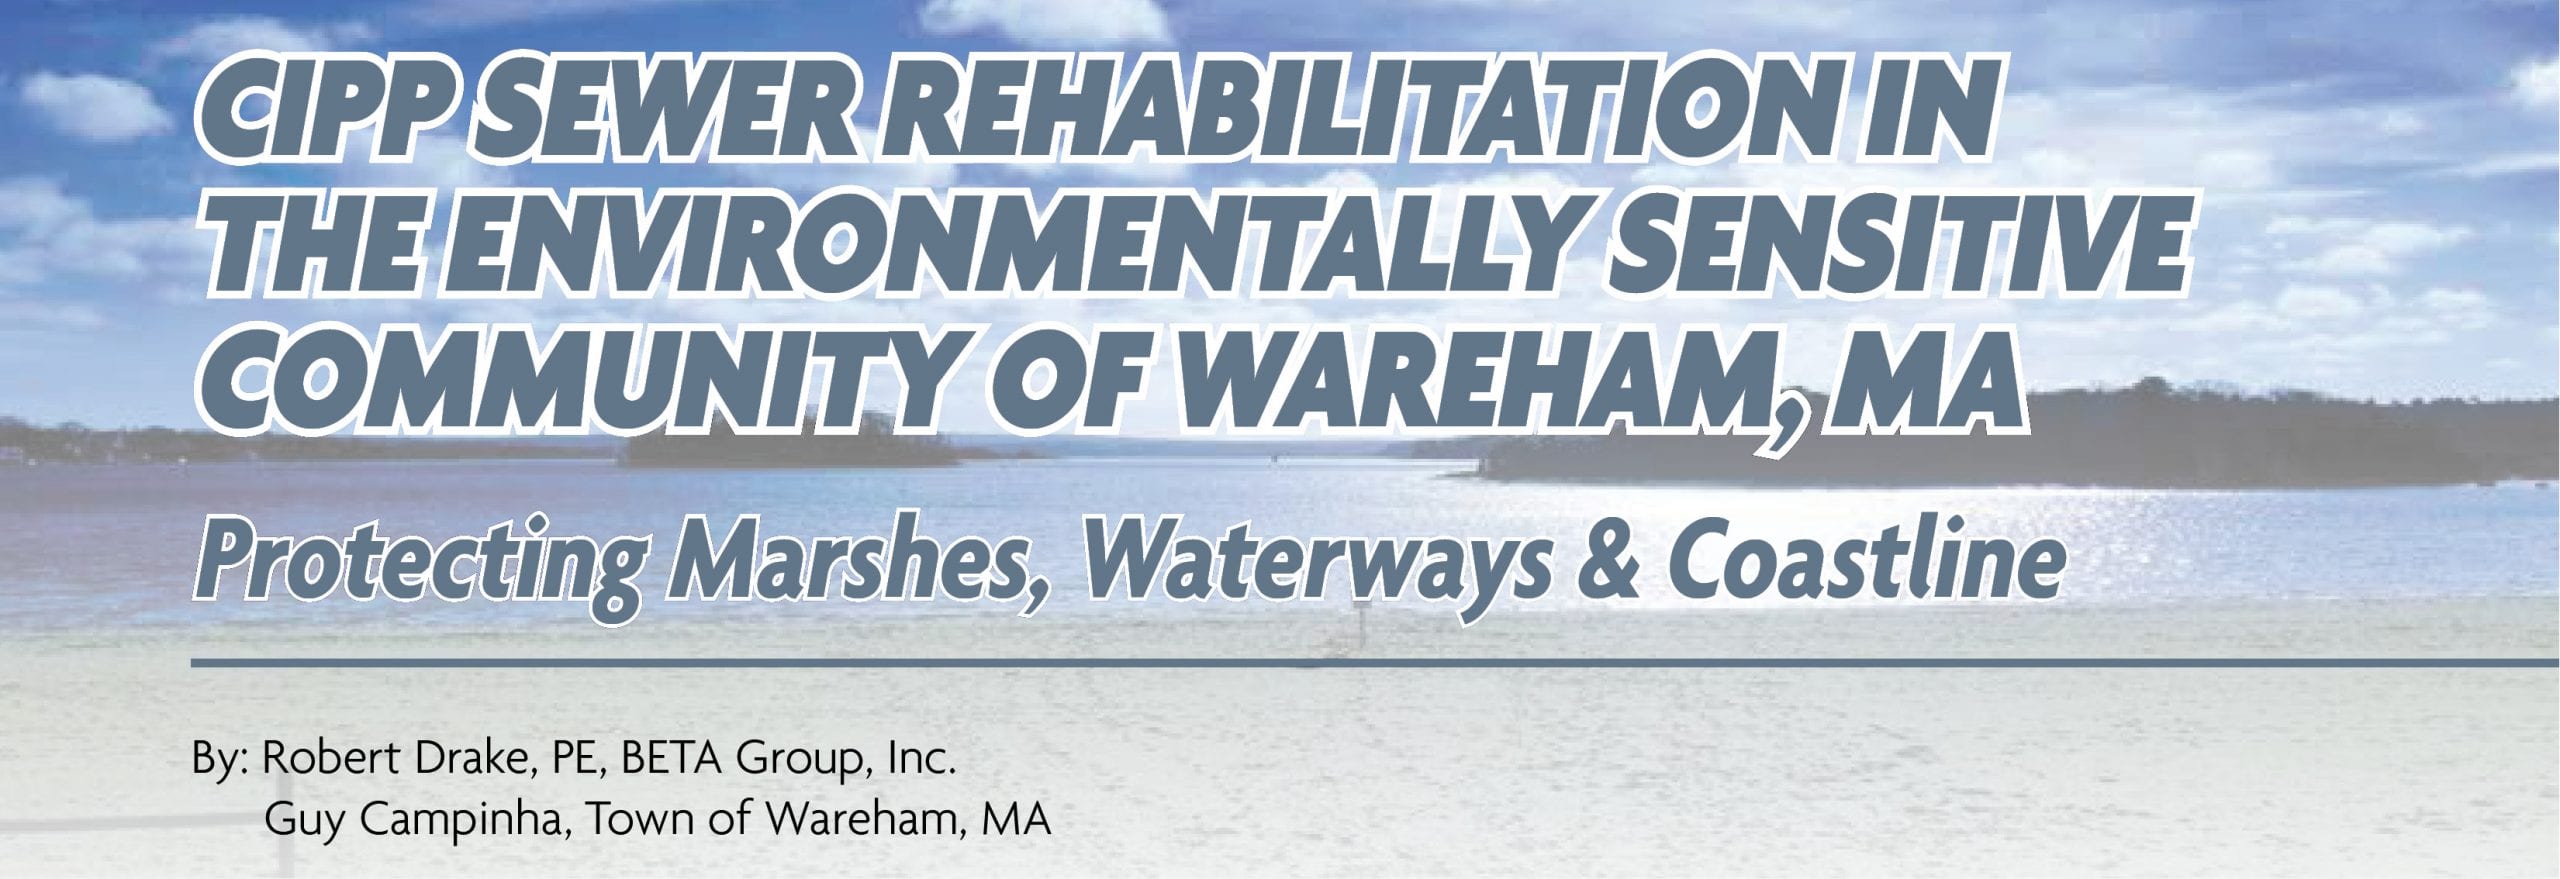 CIPP Sewer Rehabilitation in the Environmentally Sensitive Community of Wareham, MA by Robert Drake, PE and Guy Campinha